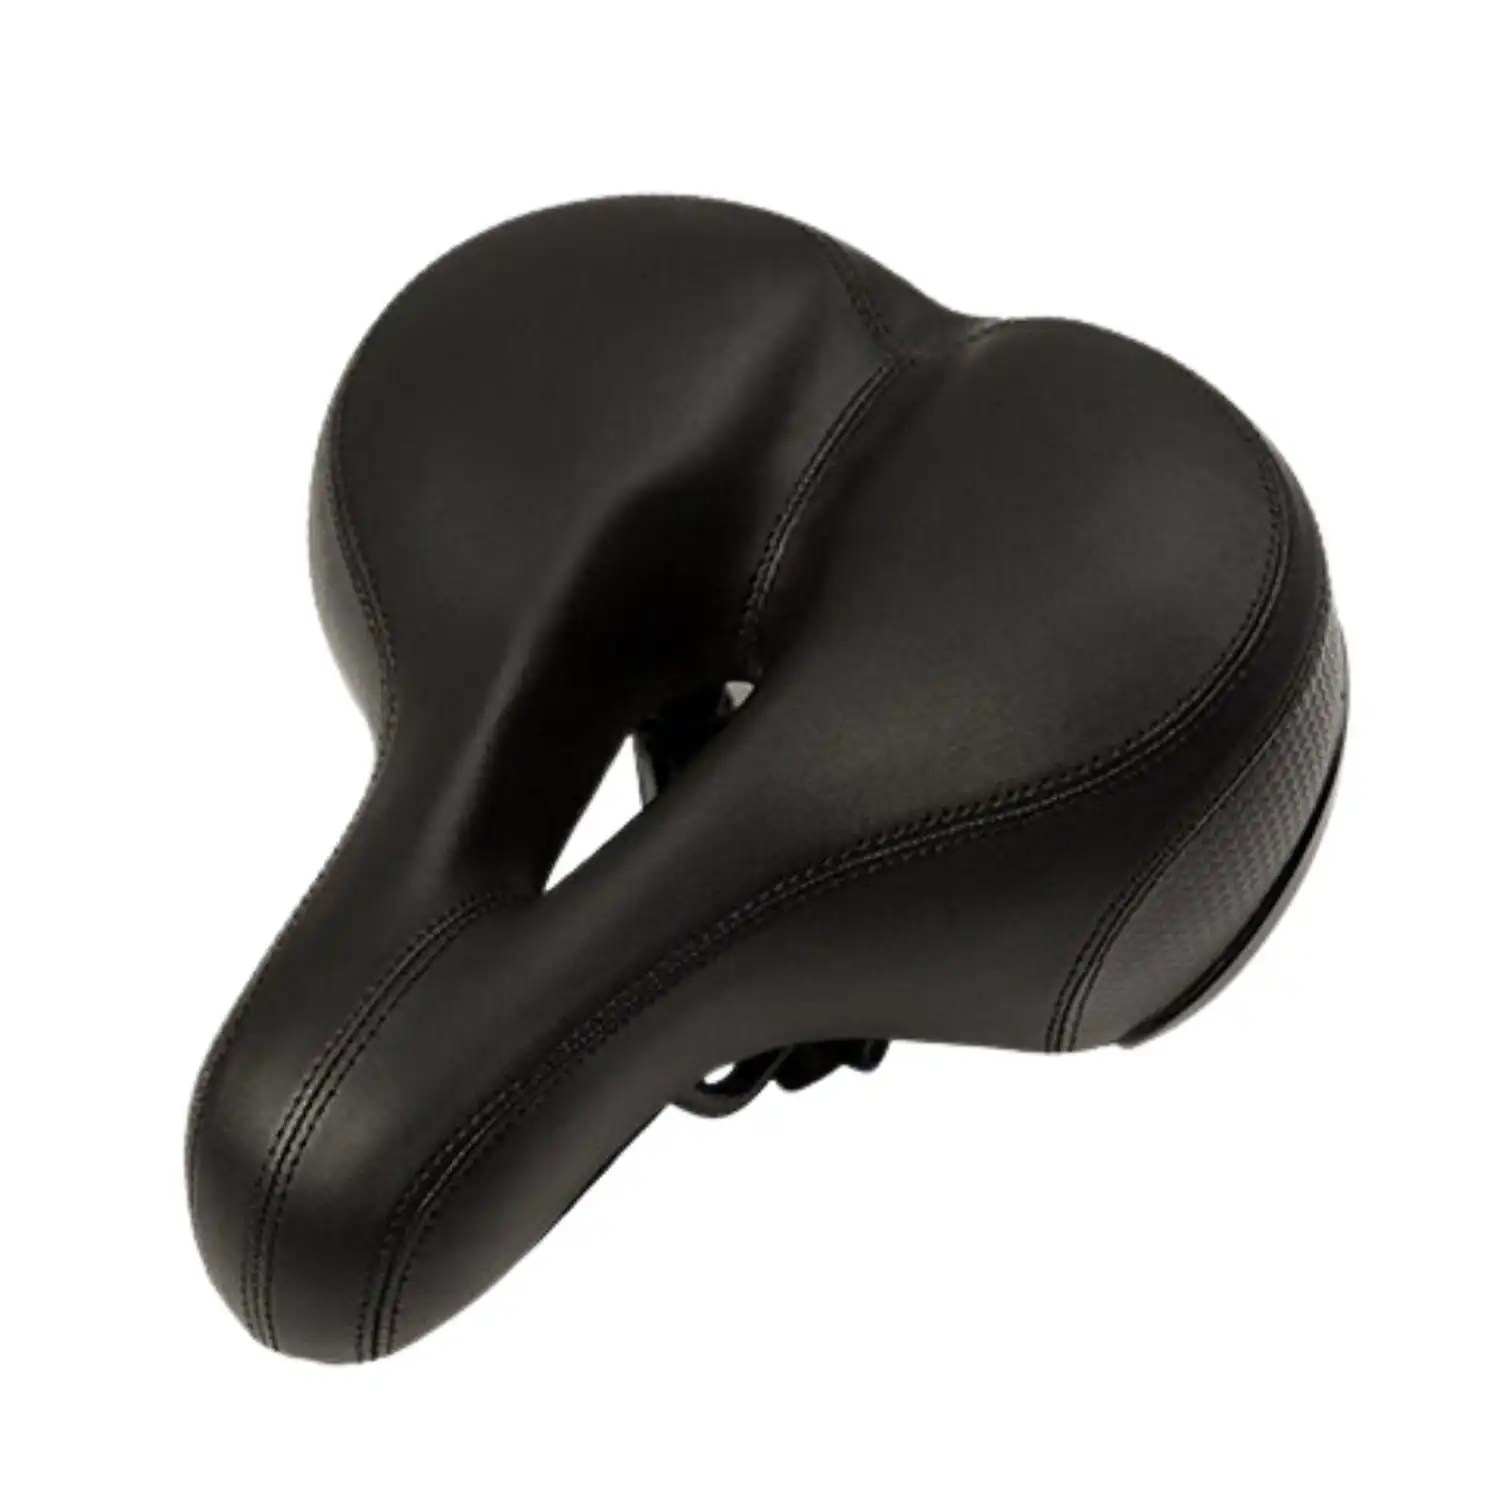 Verpeak Durability Waterproof Comfortable Bike Seat Wide Bicycle Saddle Cushion For Women And Men (Black)